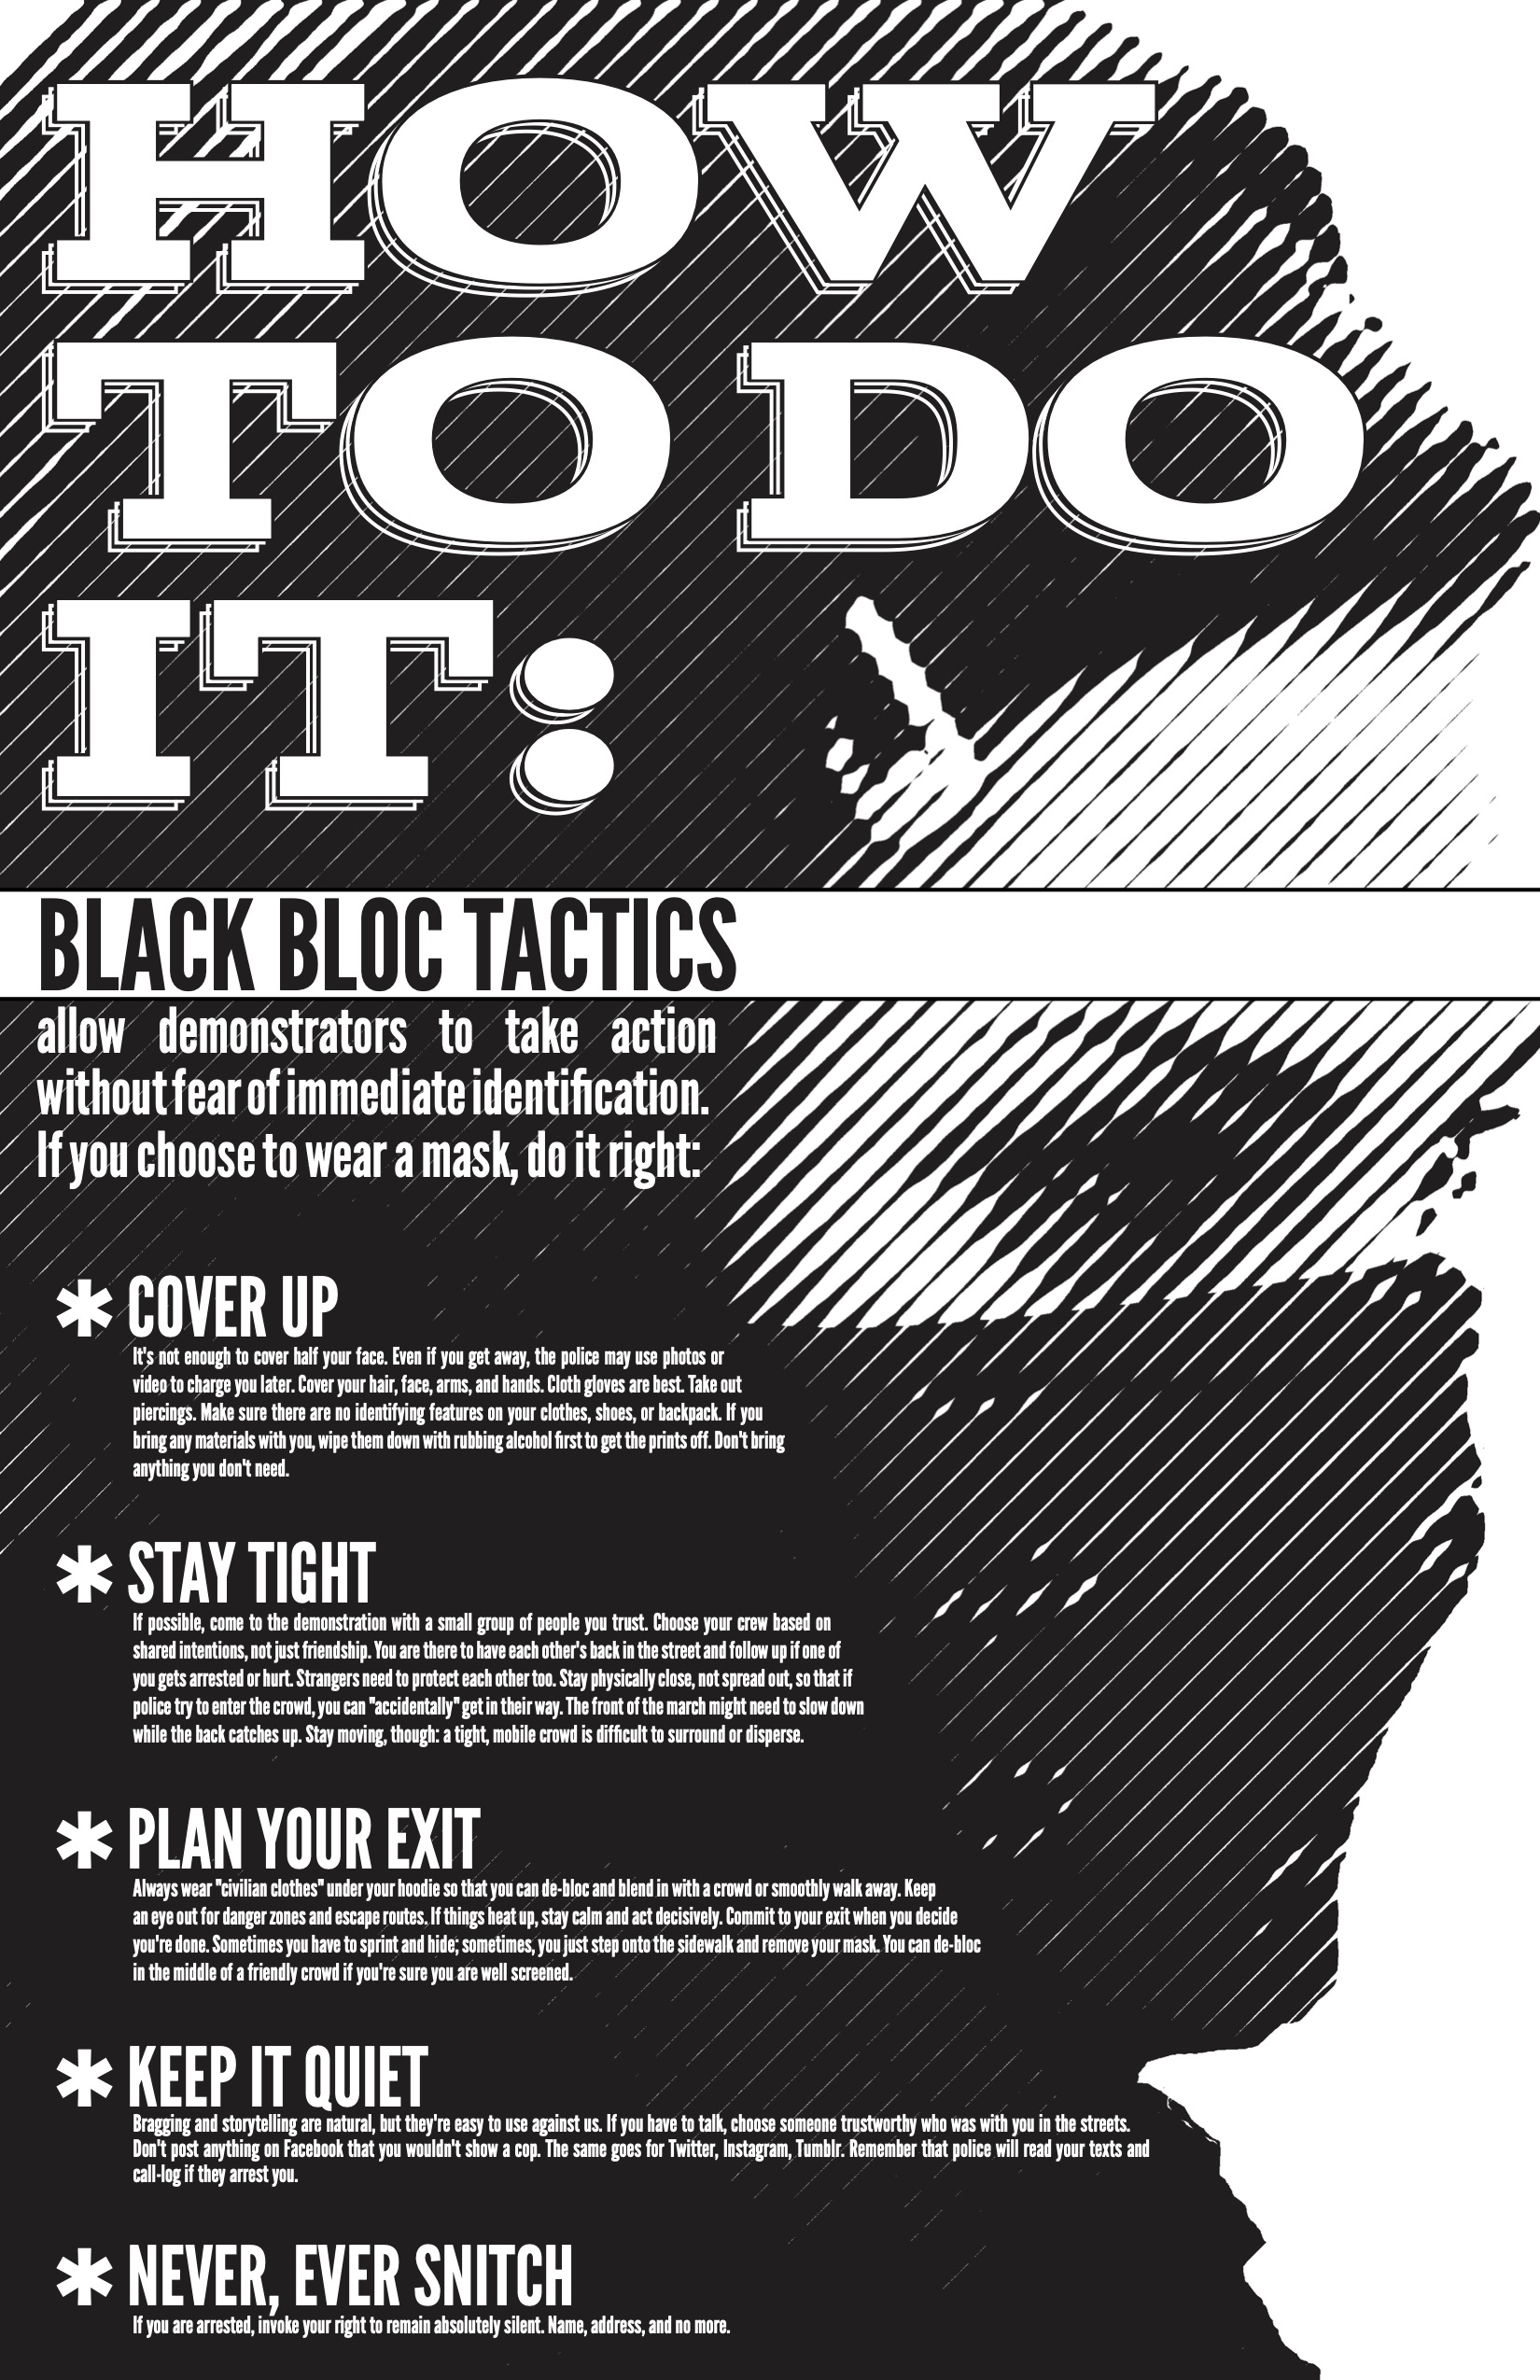 Photo of ‘Black Bloc Tactics’ front side